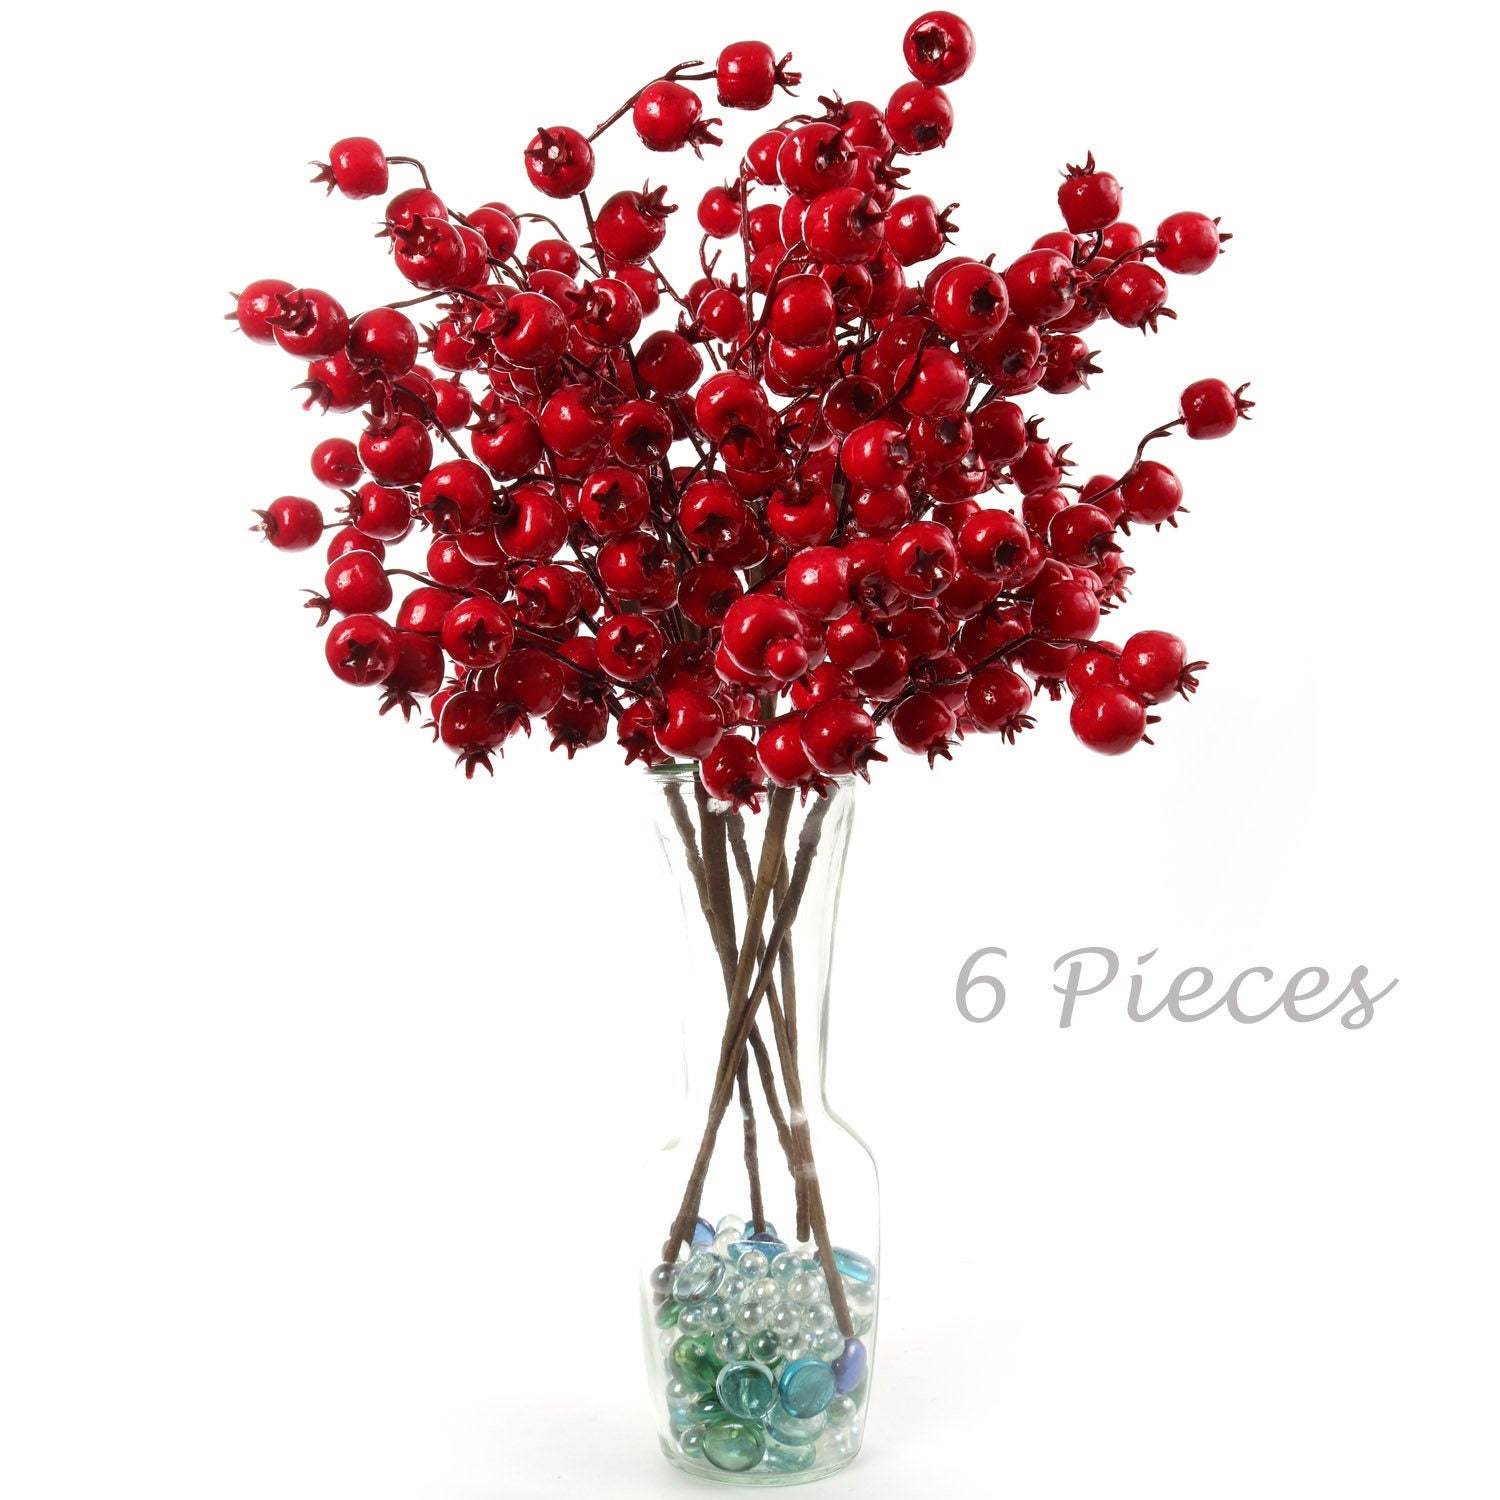 Lifelike Artificial Berry Spray 18 Christmas Trees Wreaths Garlands Centerpiece